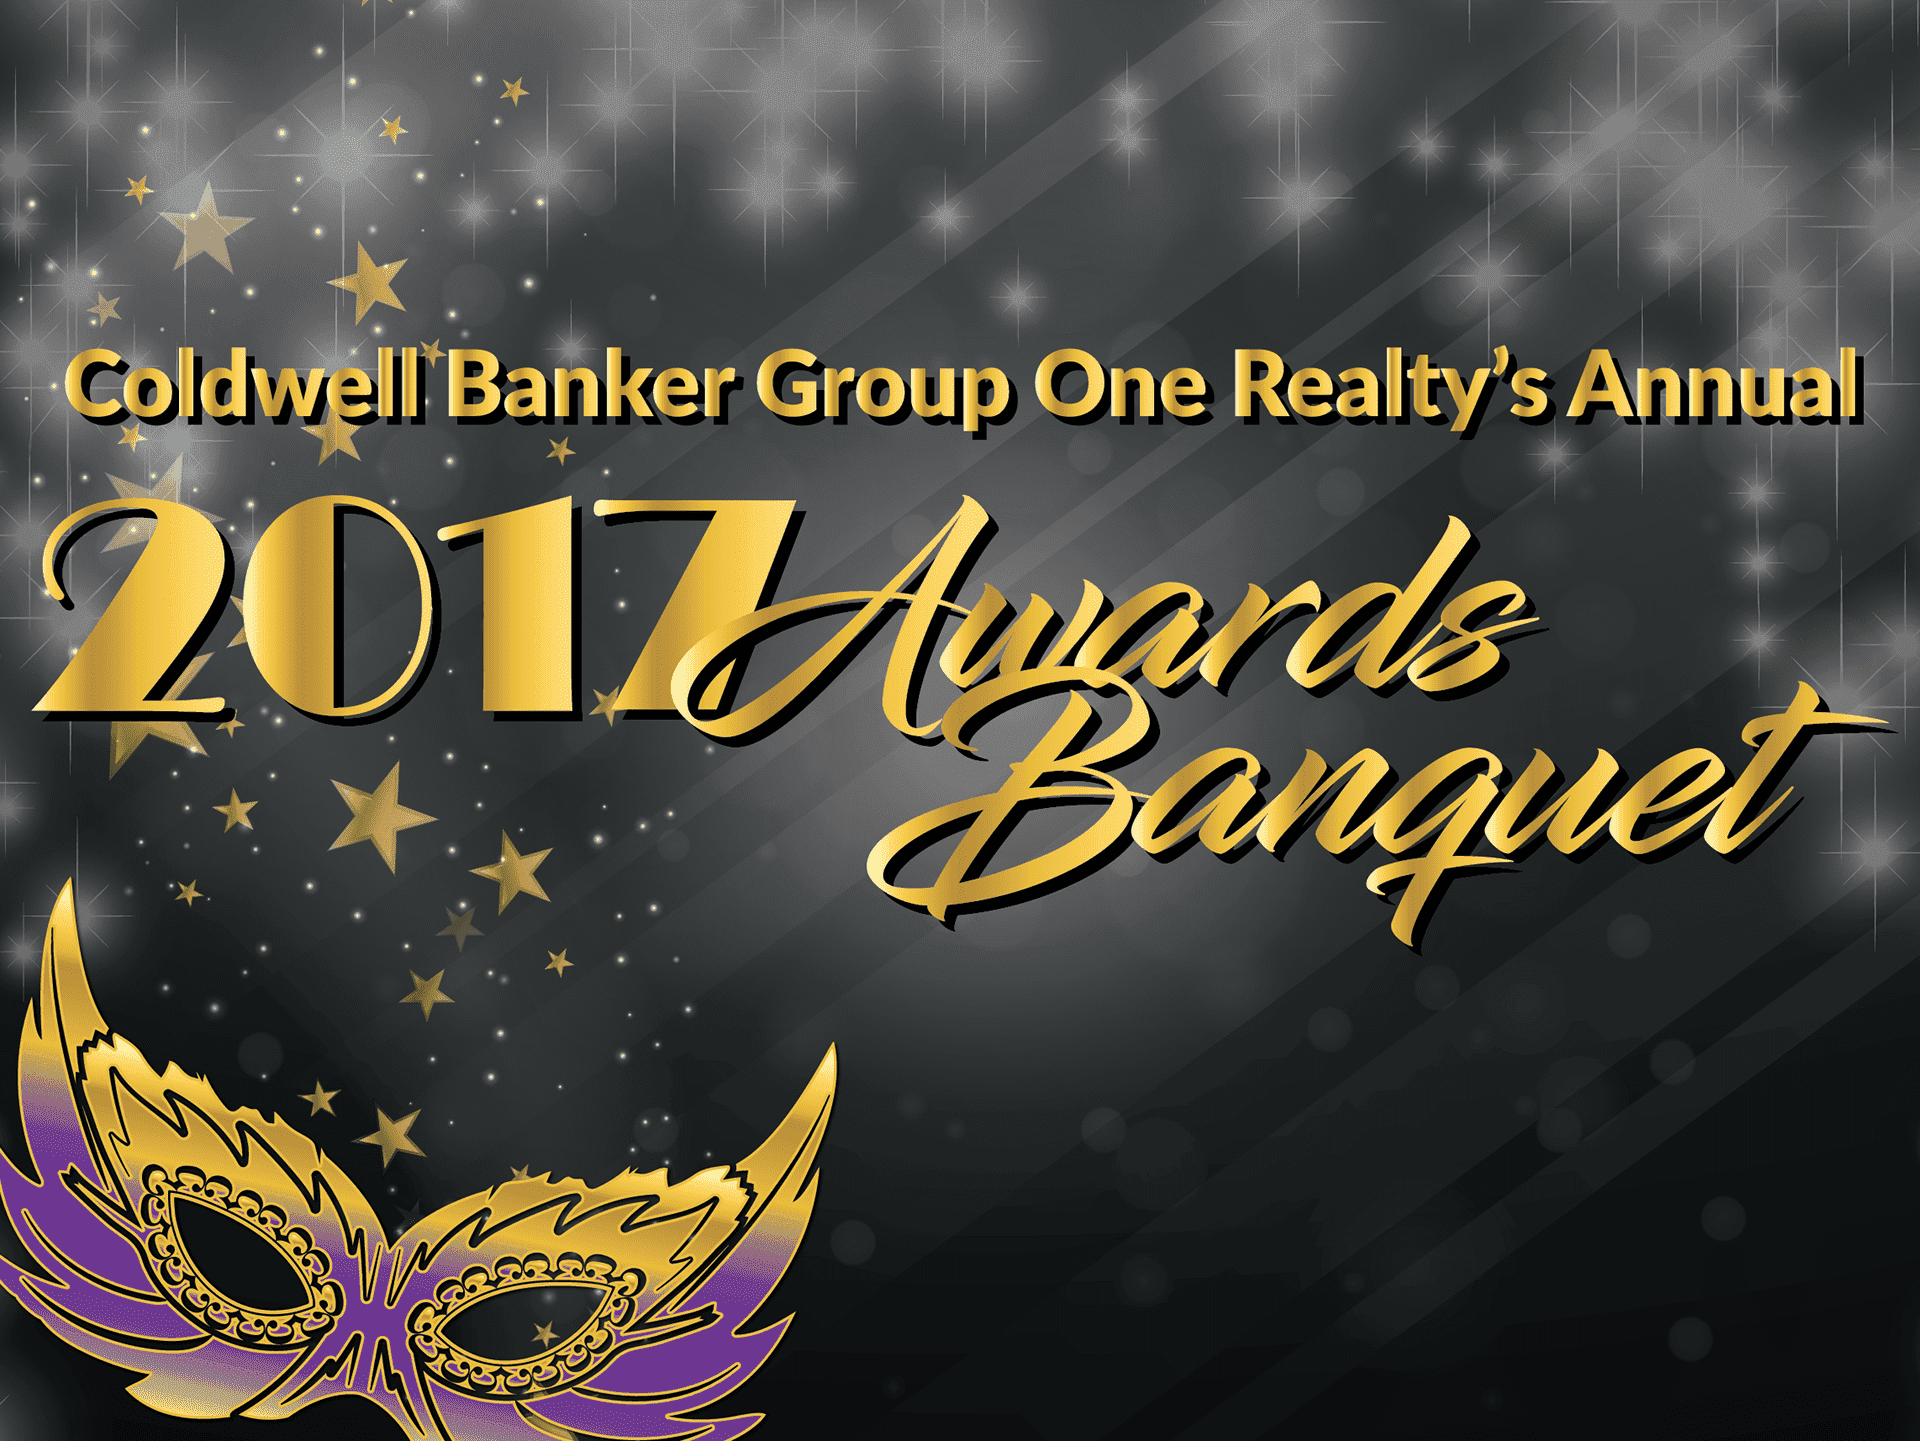 2017 awards banquet